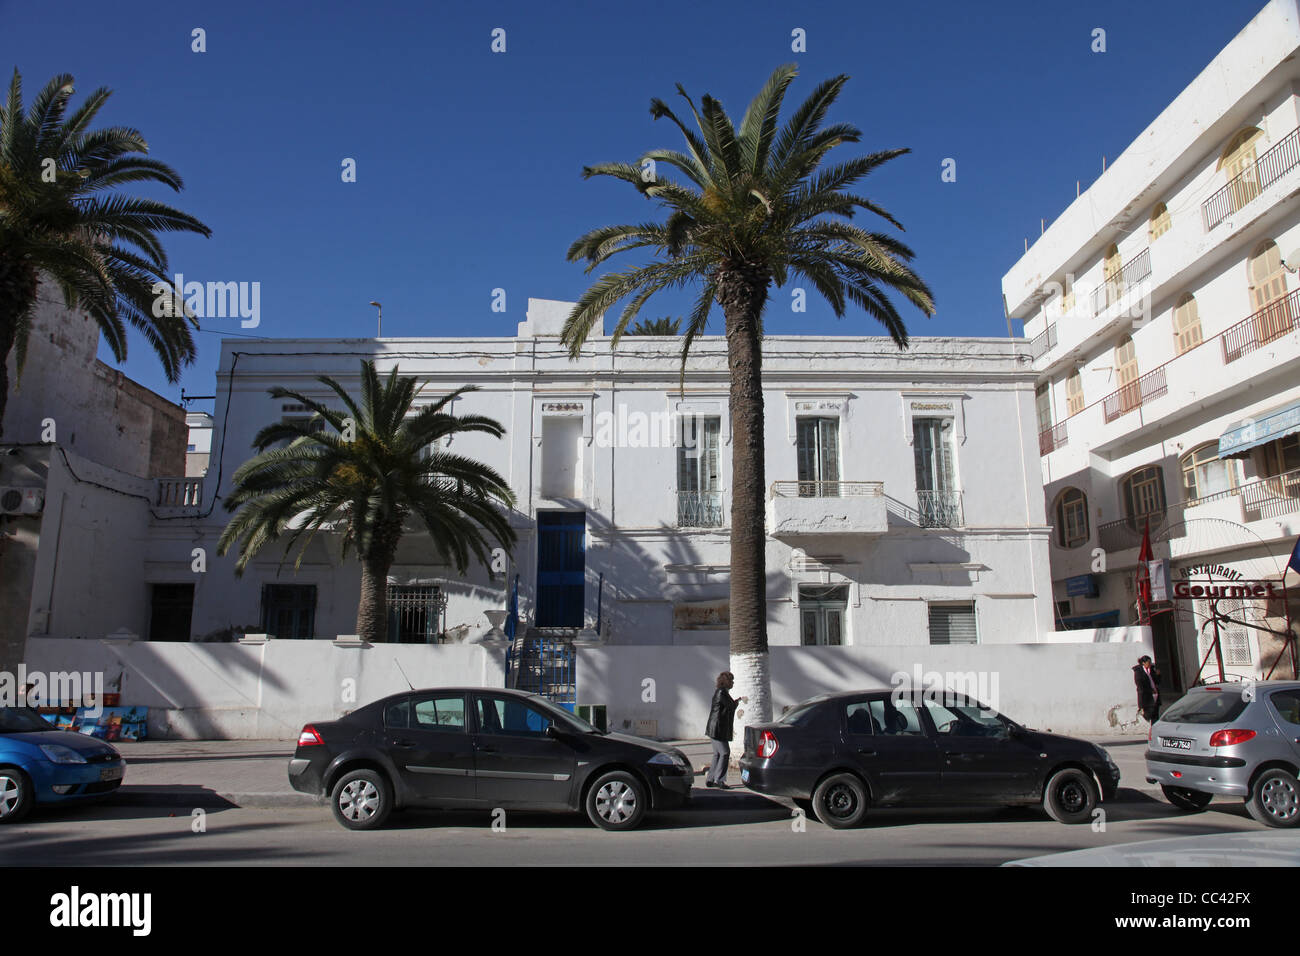 Tunisian traditional architecture Stock Photo